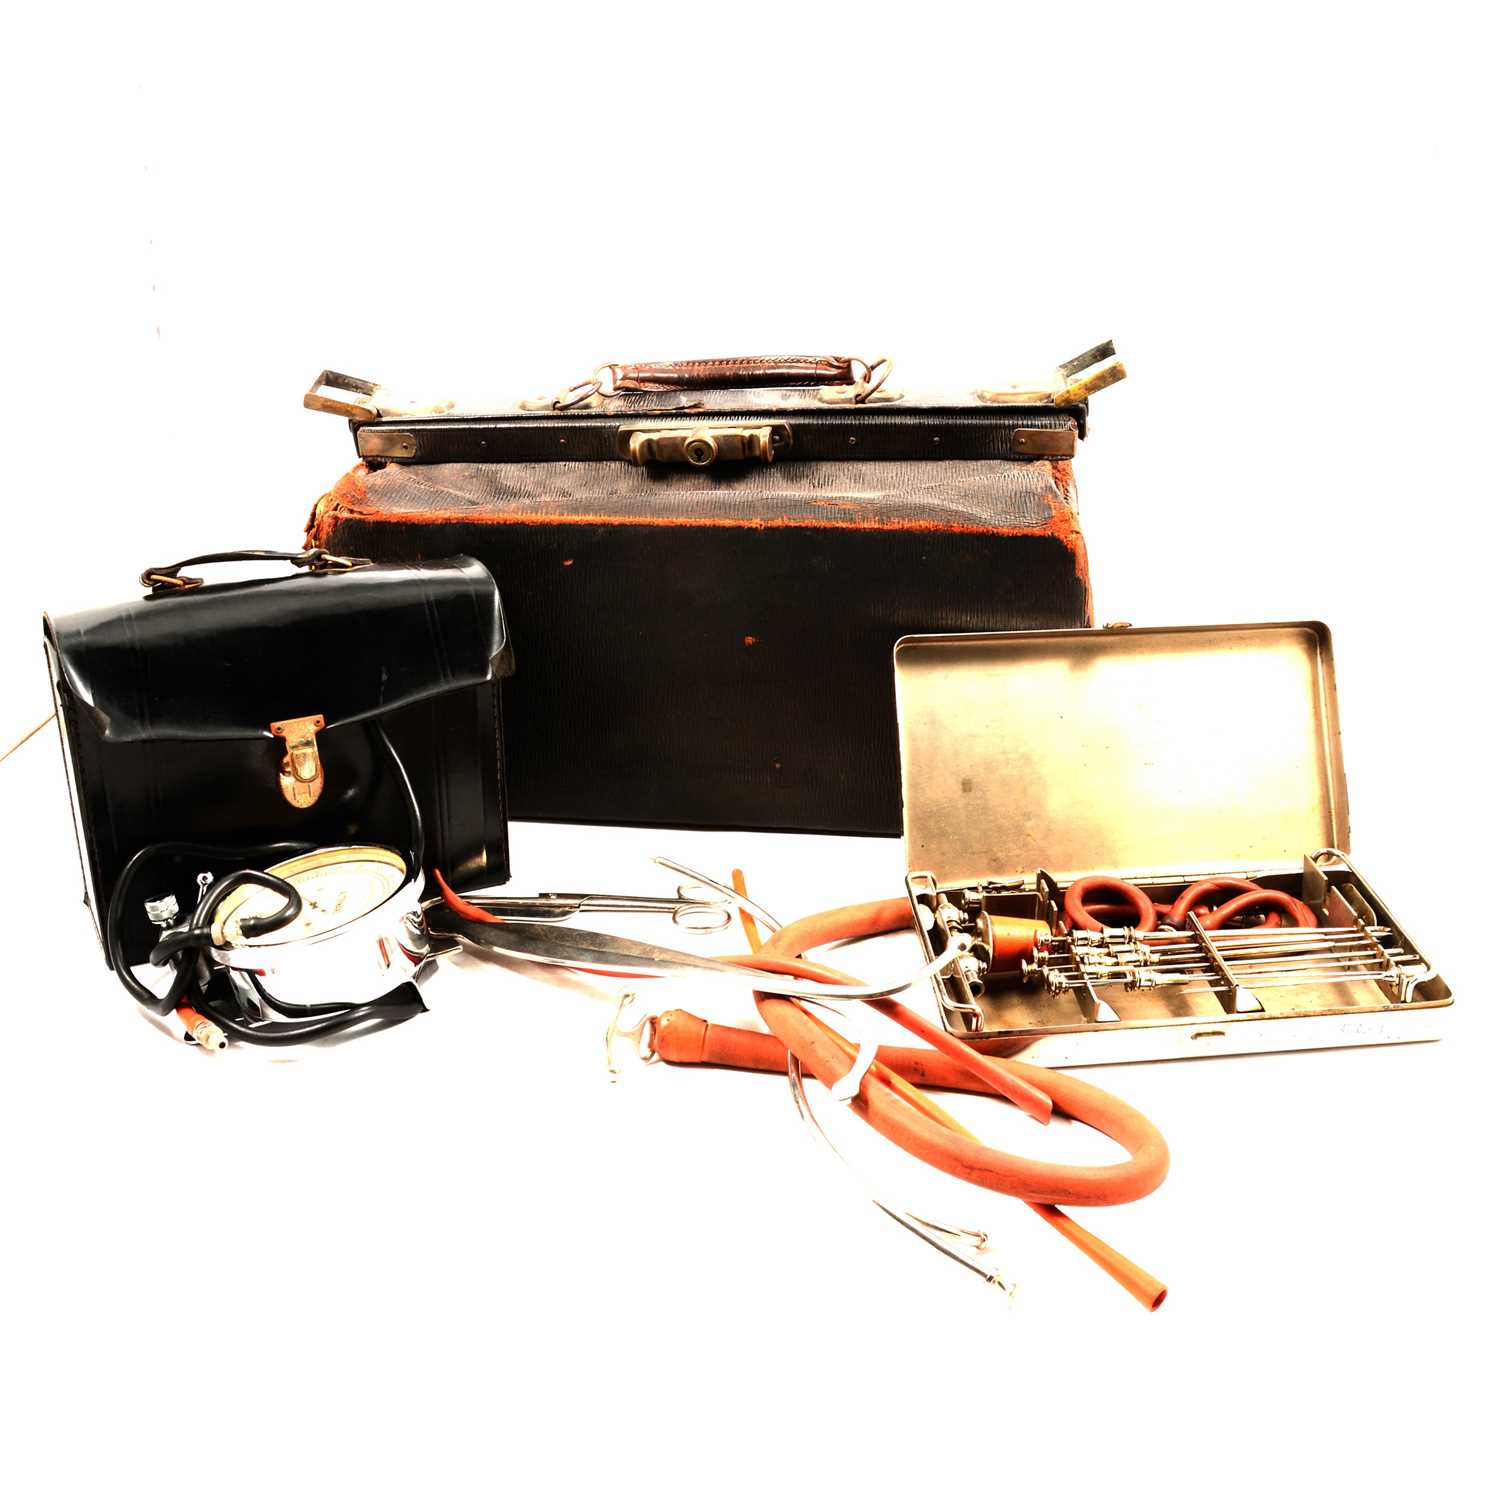 Lot 129 - Vintage leather Doctors bag and other medical equipment.